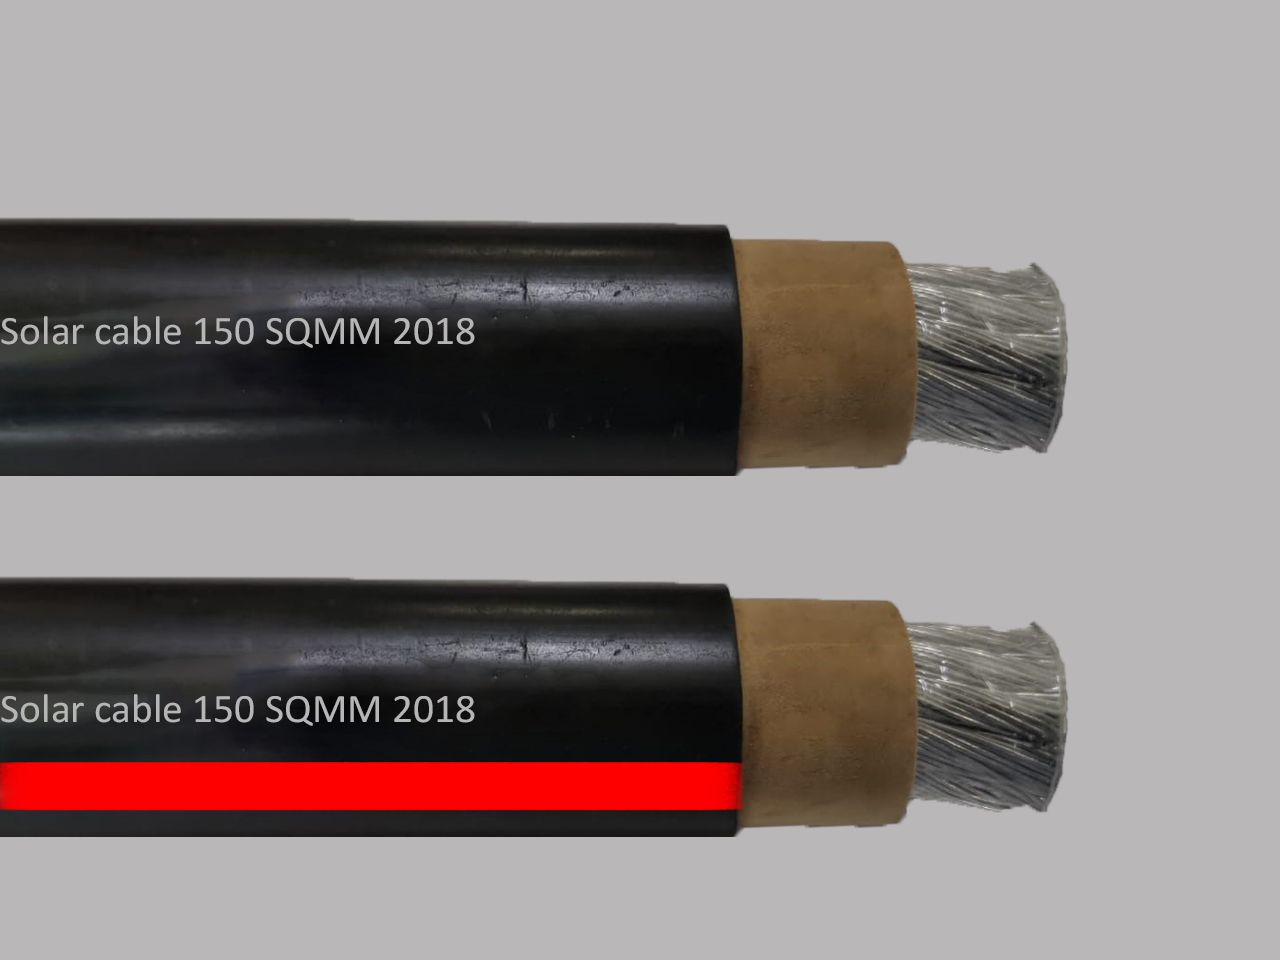 en-certified-dc-solar-cable-150sqm-500mtr-drum-red_1_1_1_1.jpg